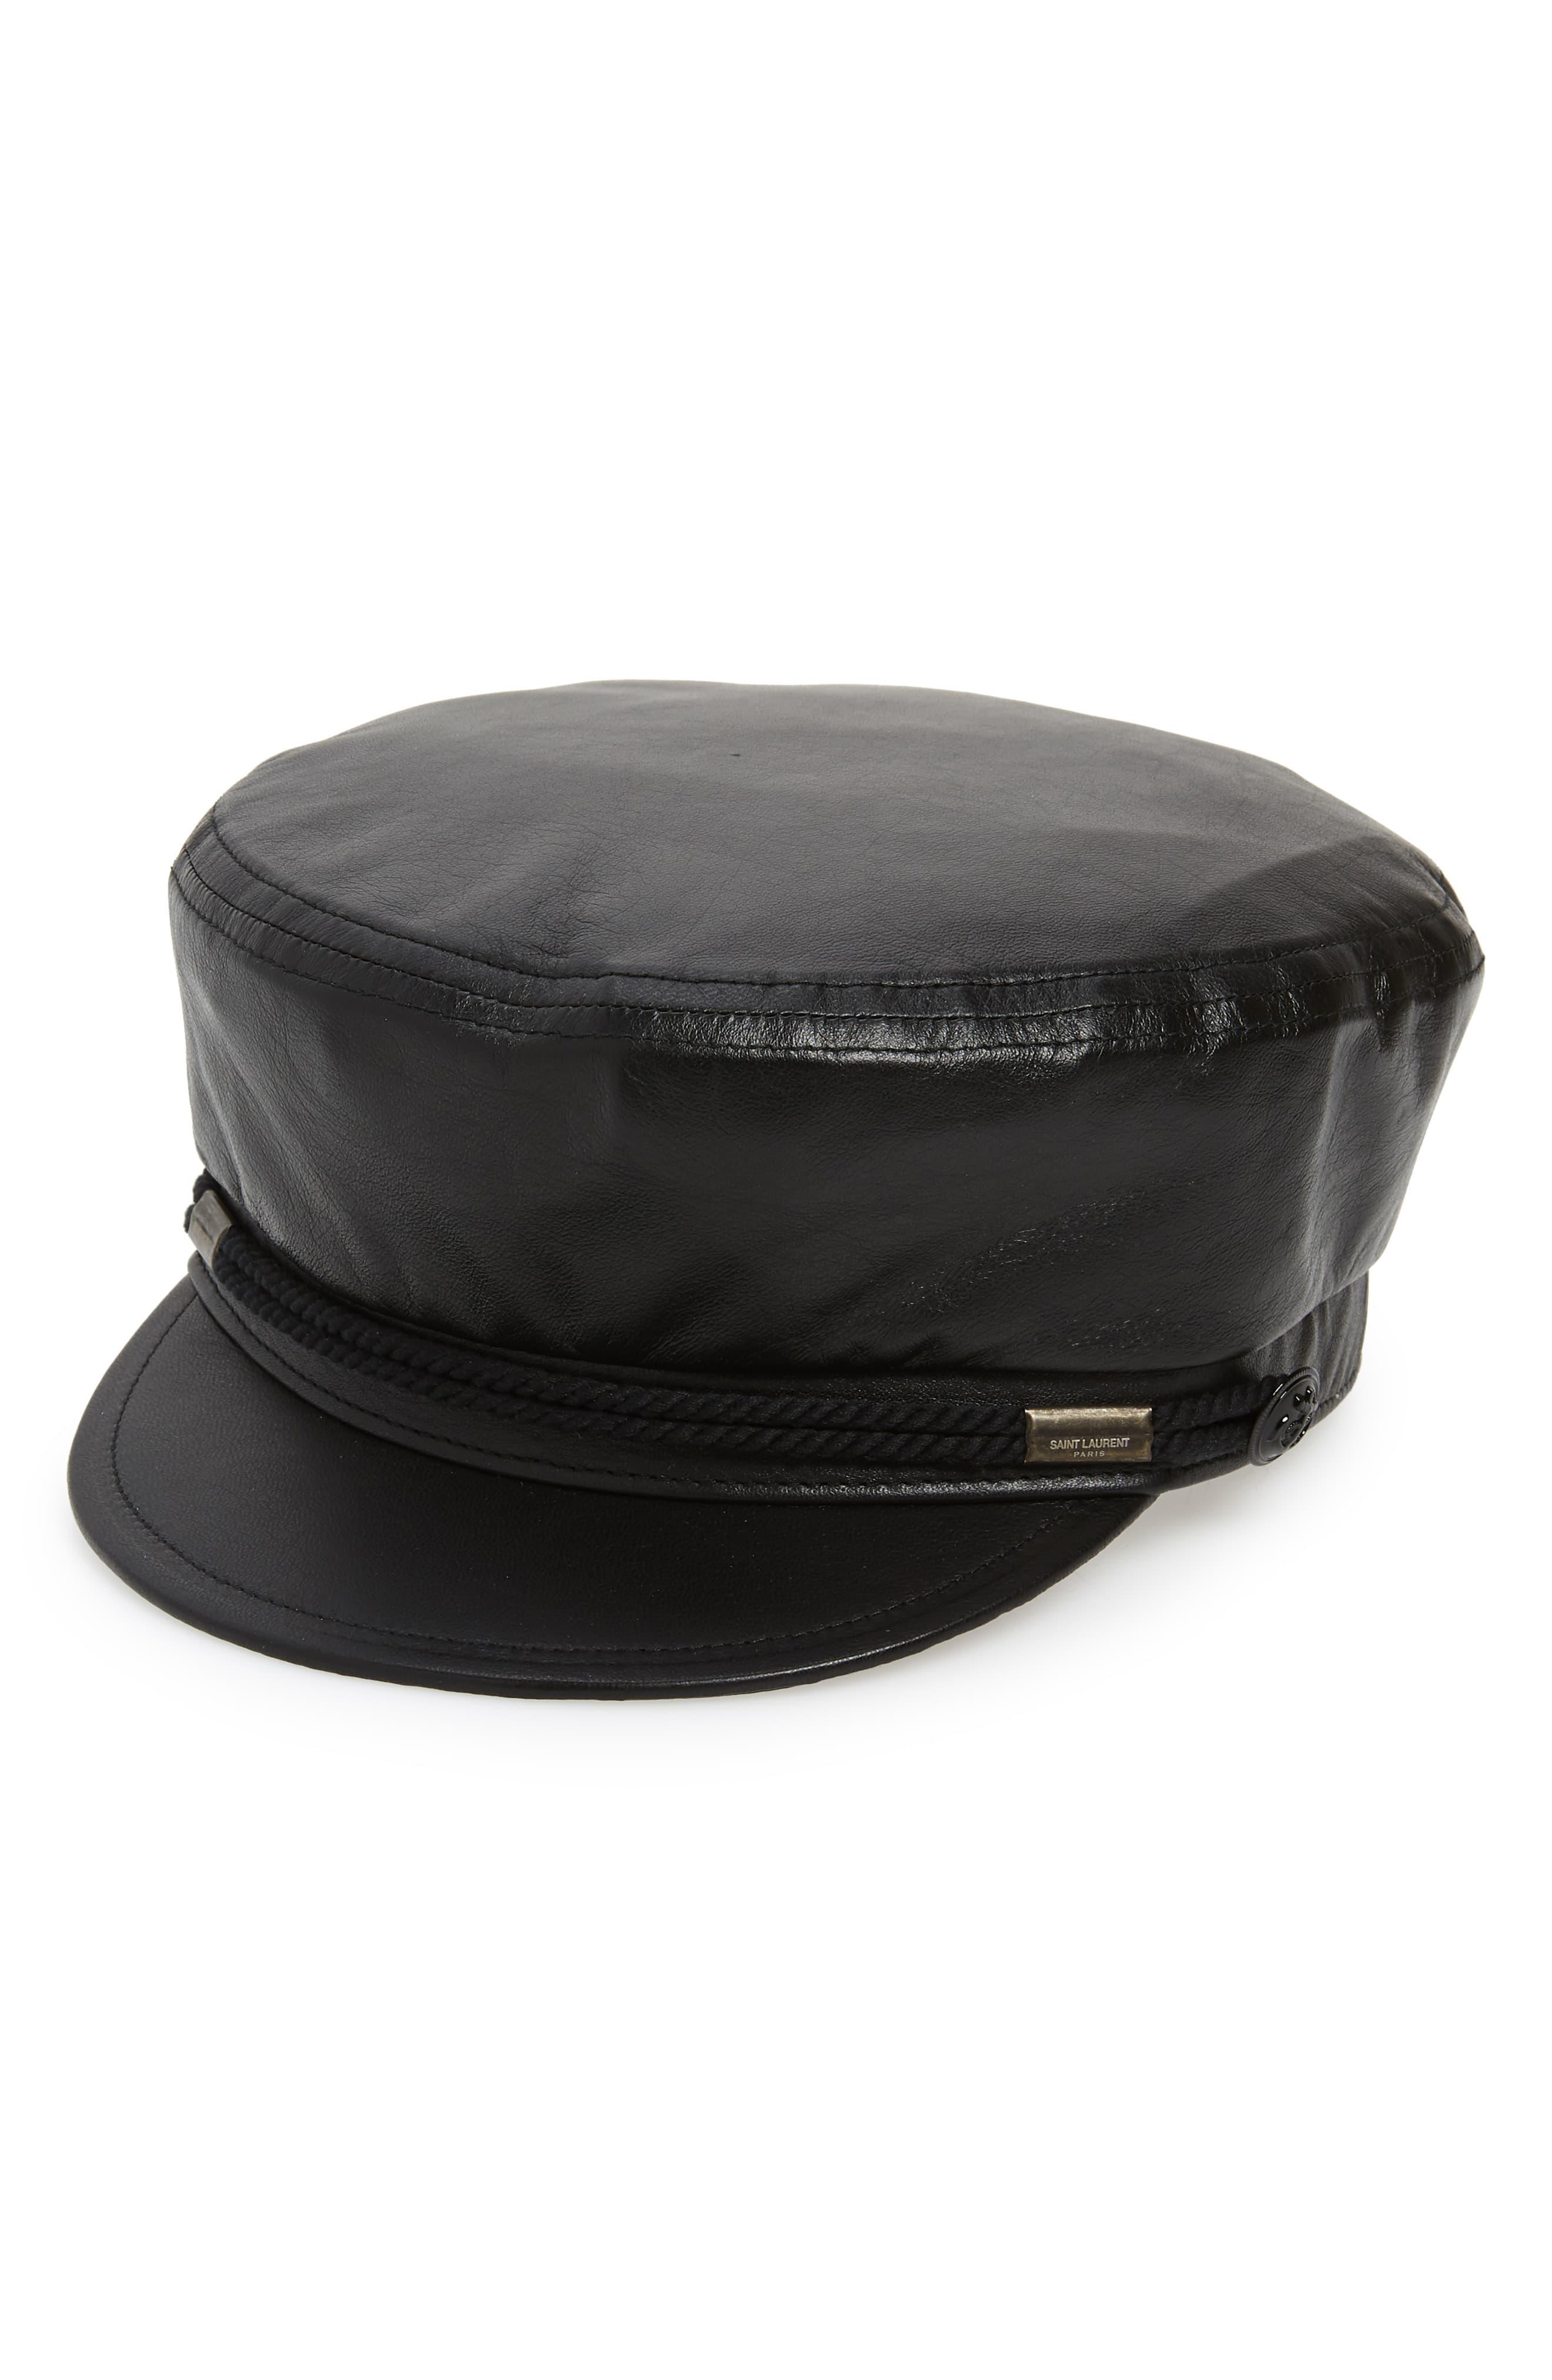 Saint Laurent Leather Baker Boy Hat in Black - Lyst